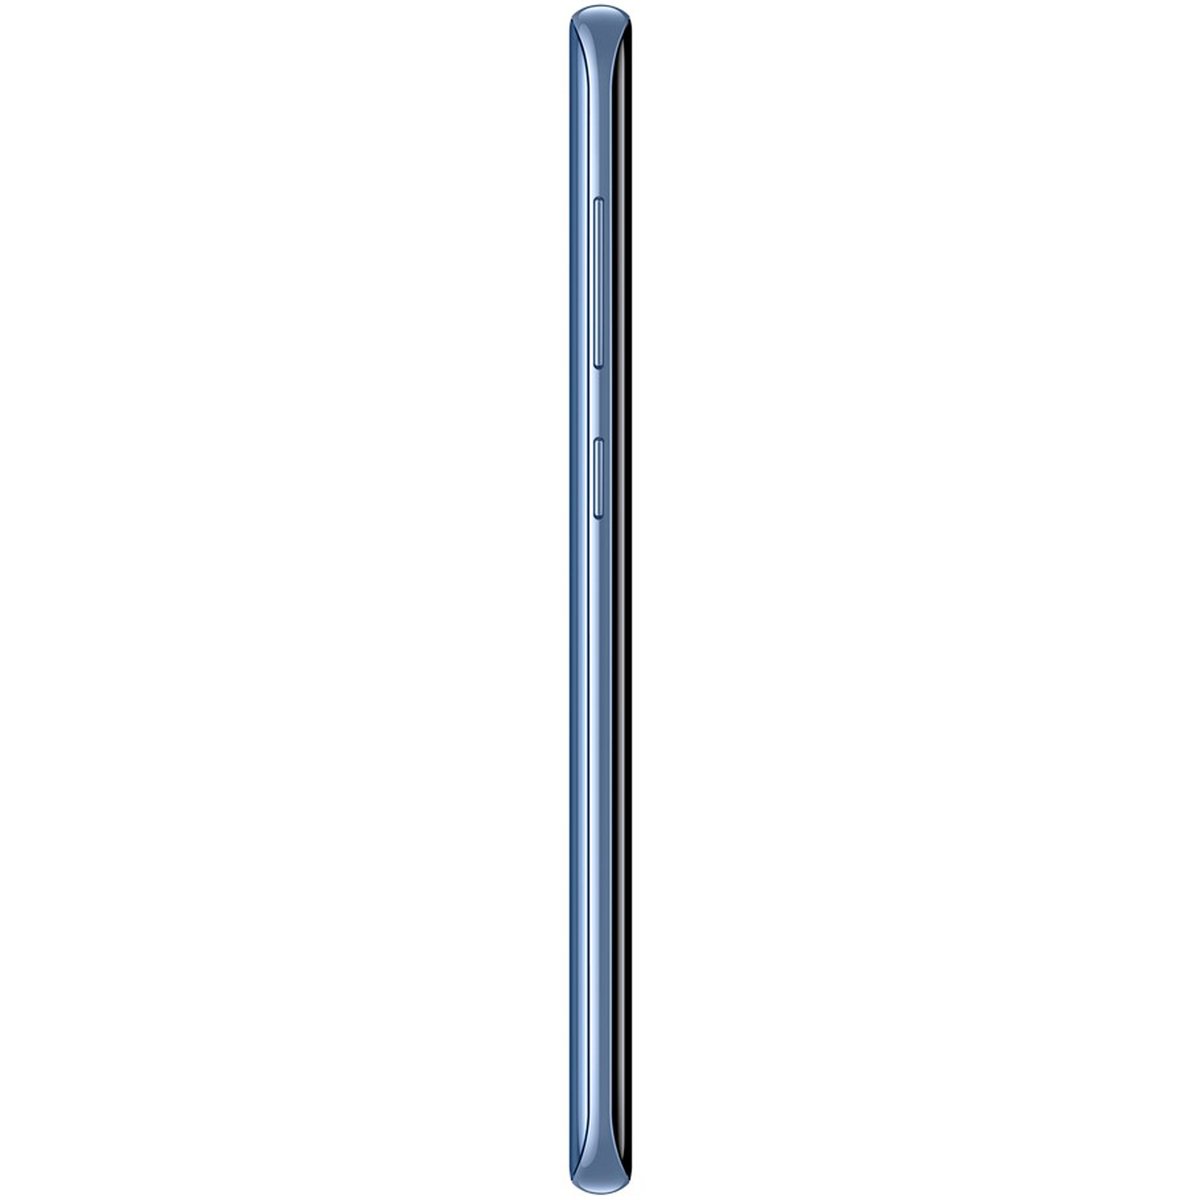 Samsung Galaxy S8 SMG950F Coral Blue